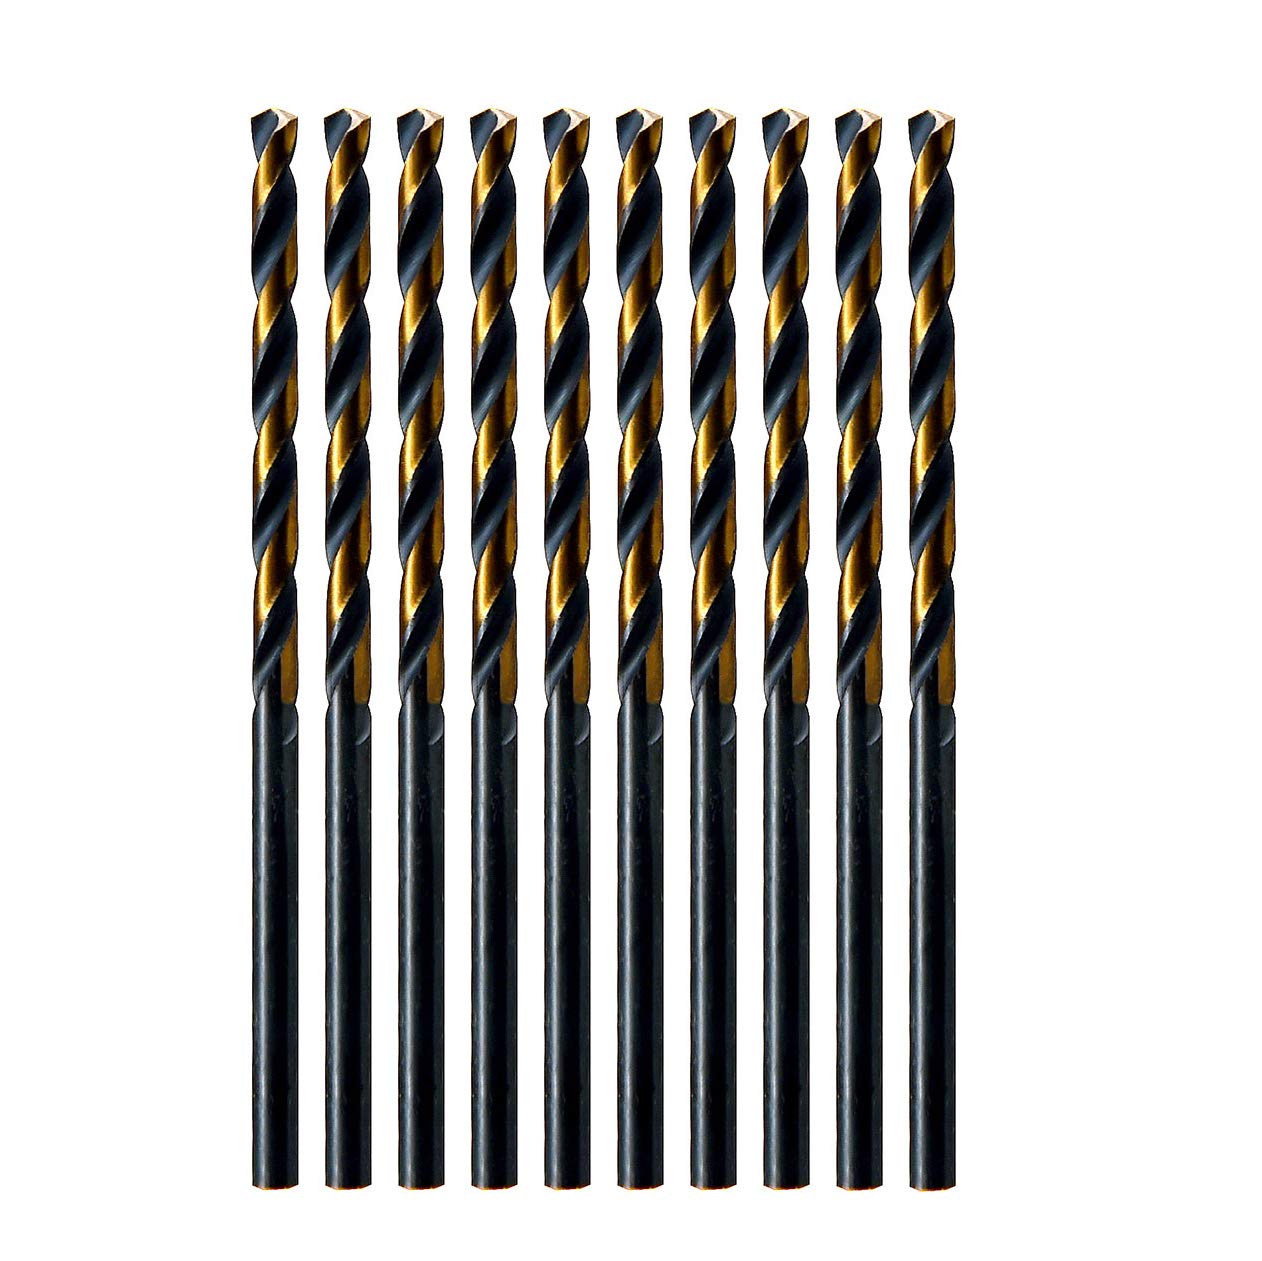 MAXTOOL 5/64" 10pcs Identical Jobber Length Drills HSS M2 Twist Drill Bits Fully Ground Black & Bronze Straight Shank Drills; JBF02H10R05P10